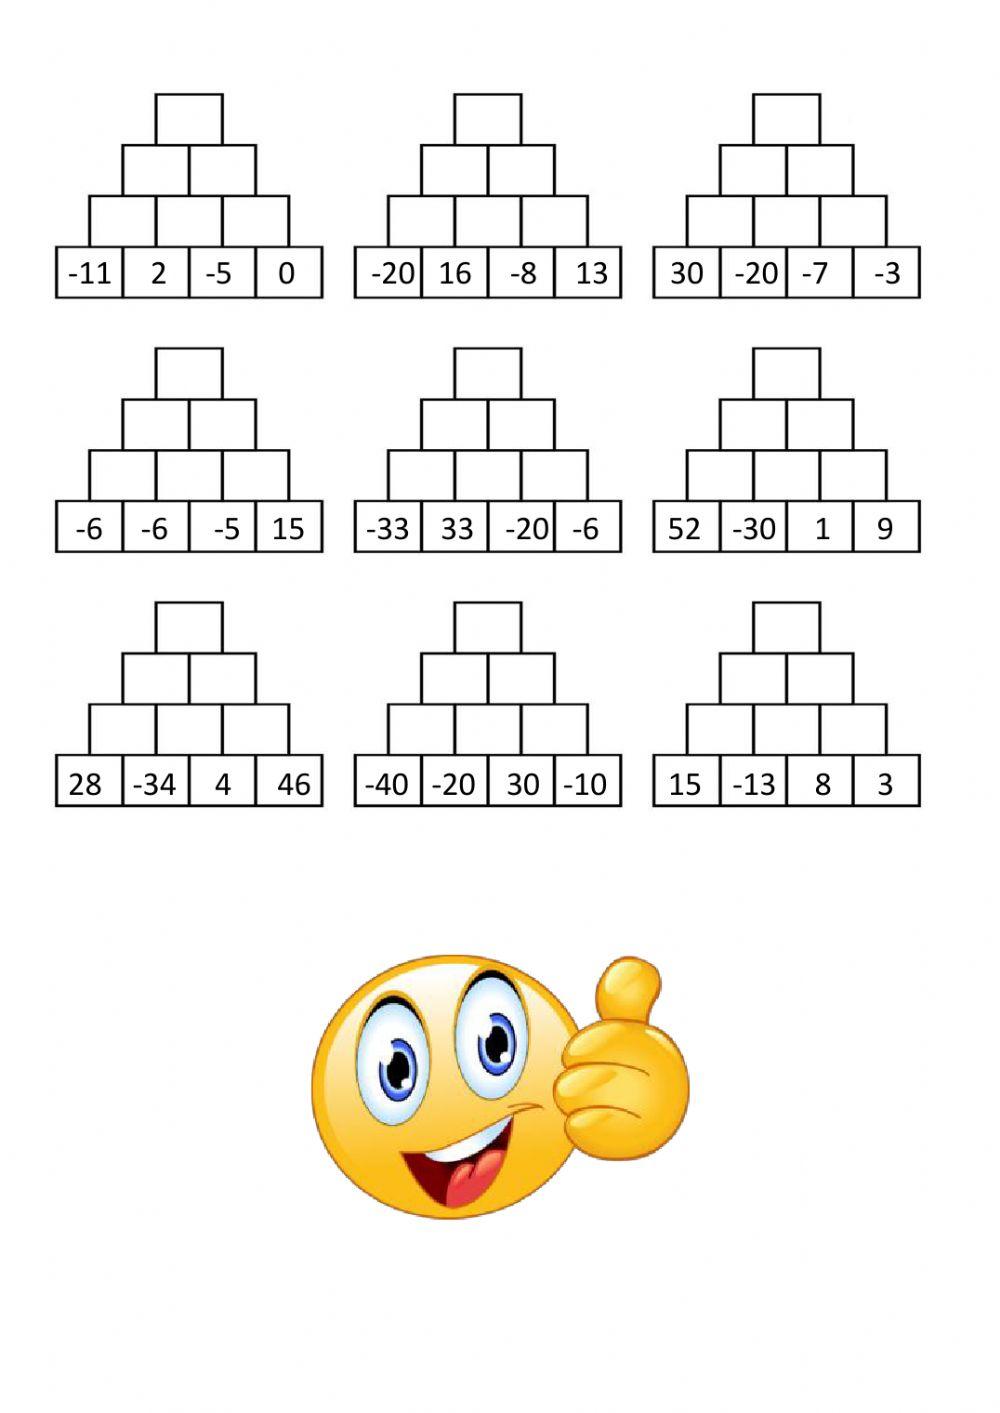 Celá čísla - sčítací pyramida